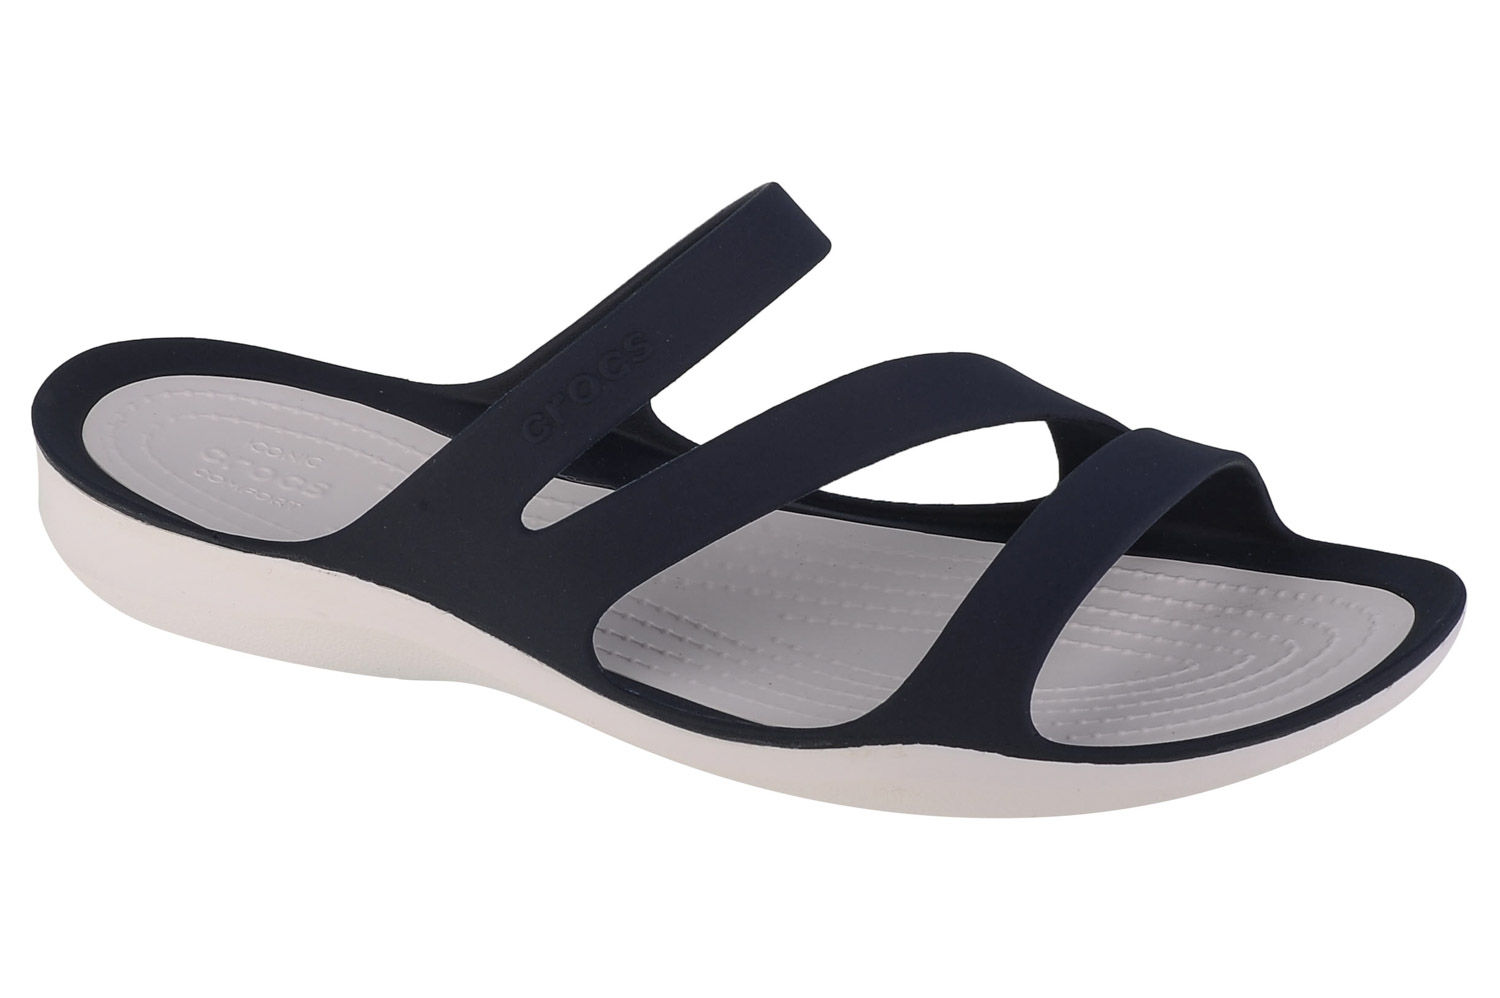 Dámské sandály Crocs SWIFTWATER tmavě modrá/bílá 38-39